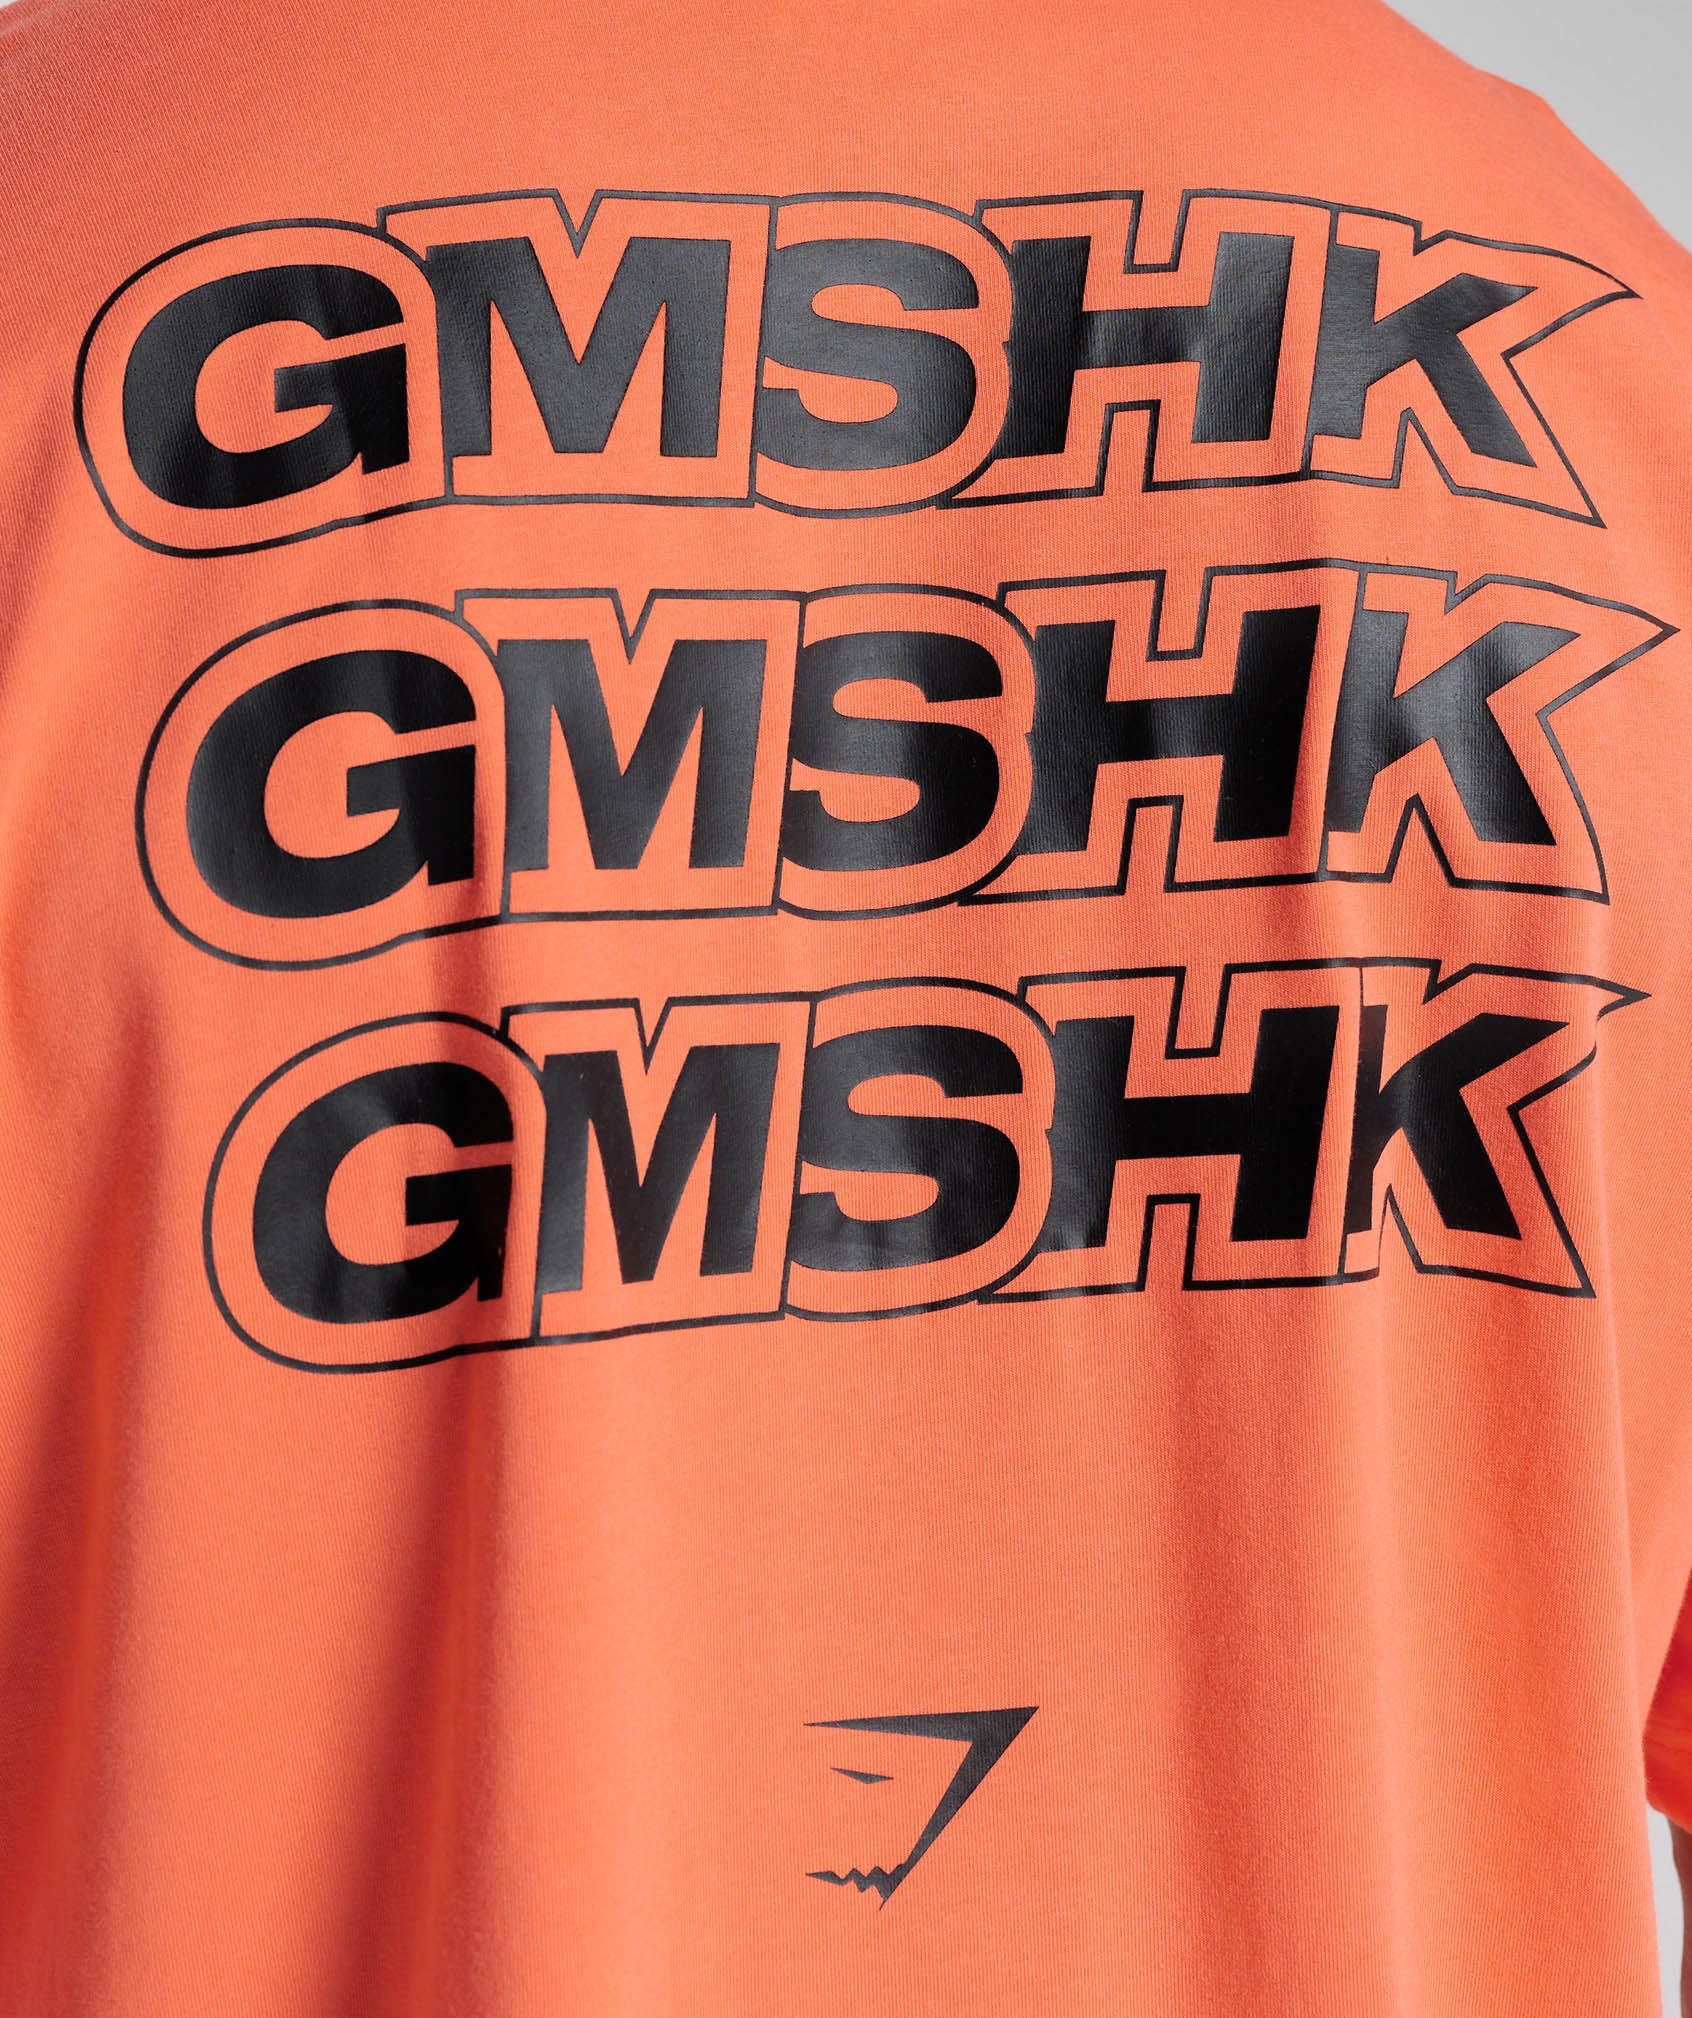 GMSHK Oversized T-Shirt in Solstice Orange - view 3